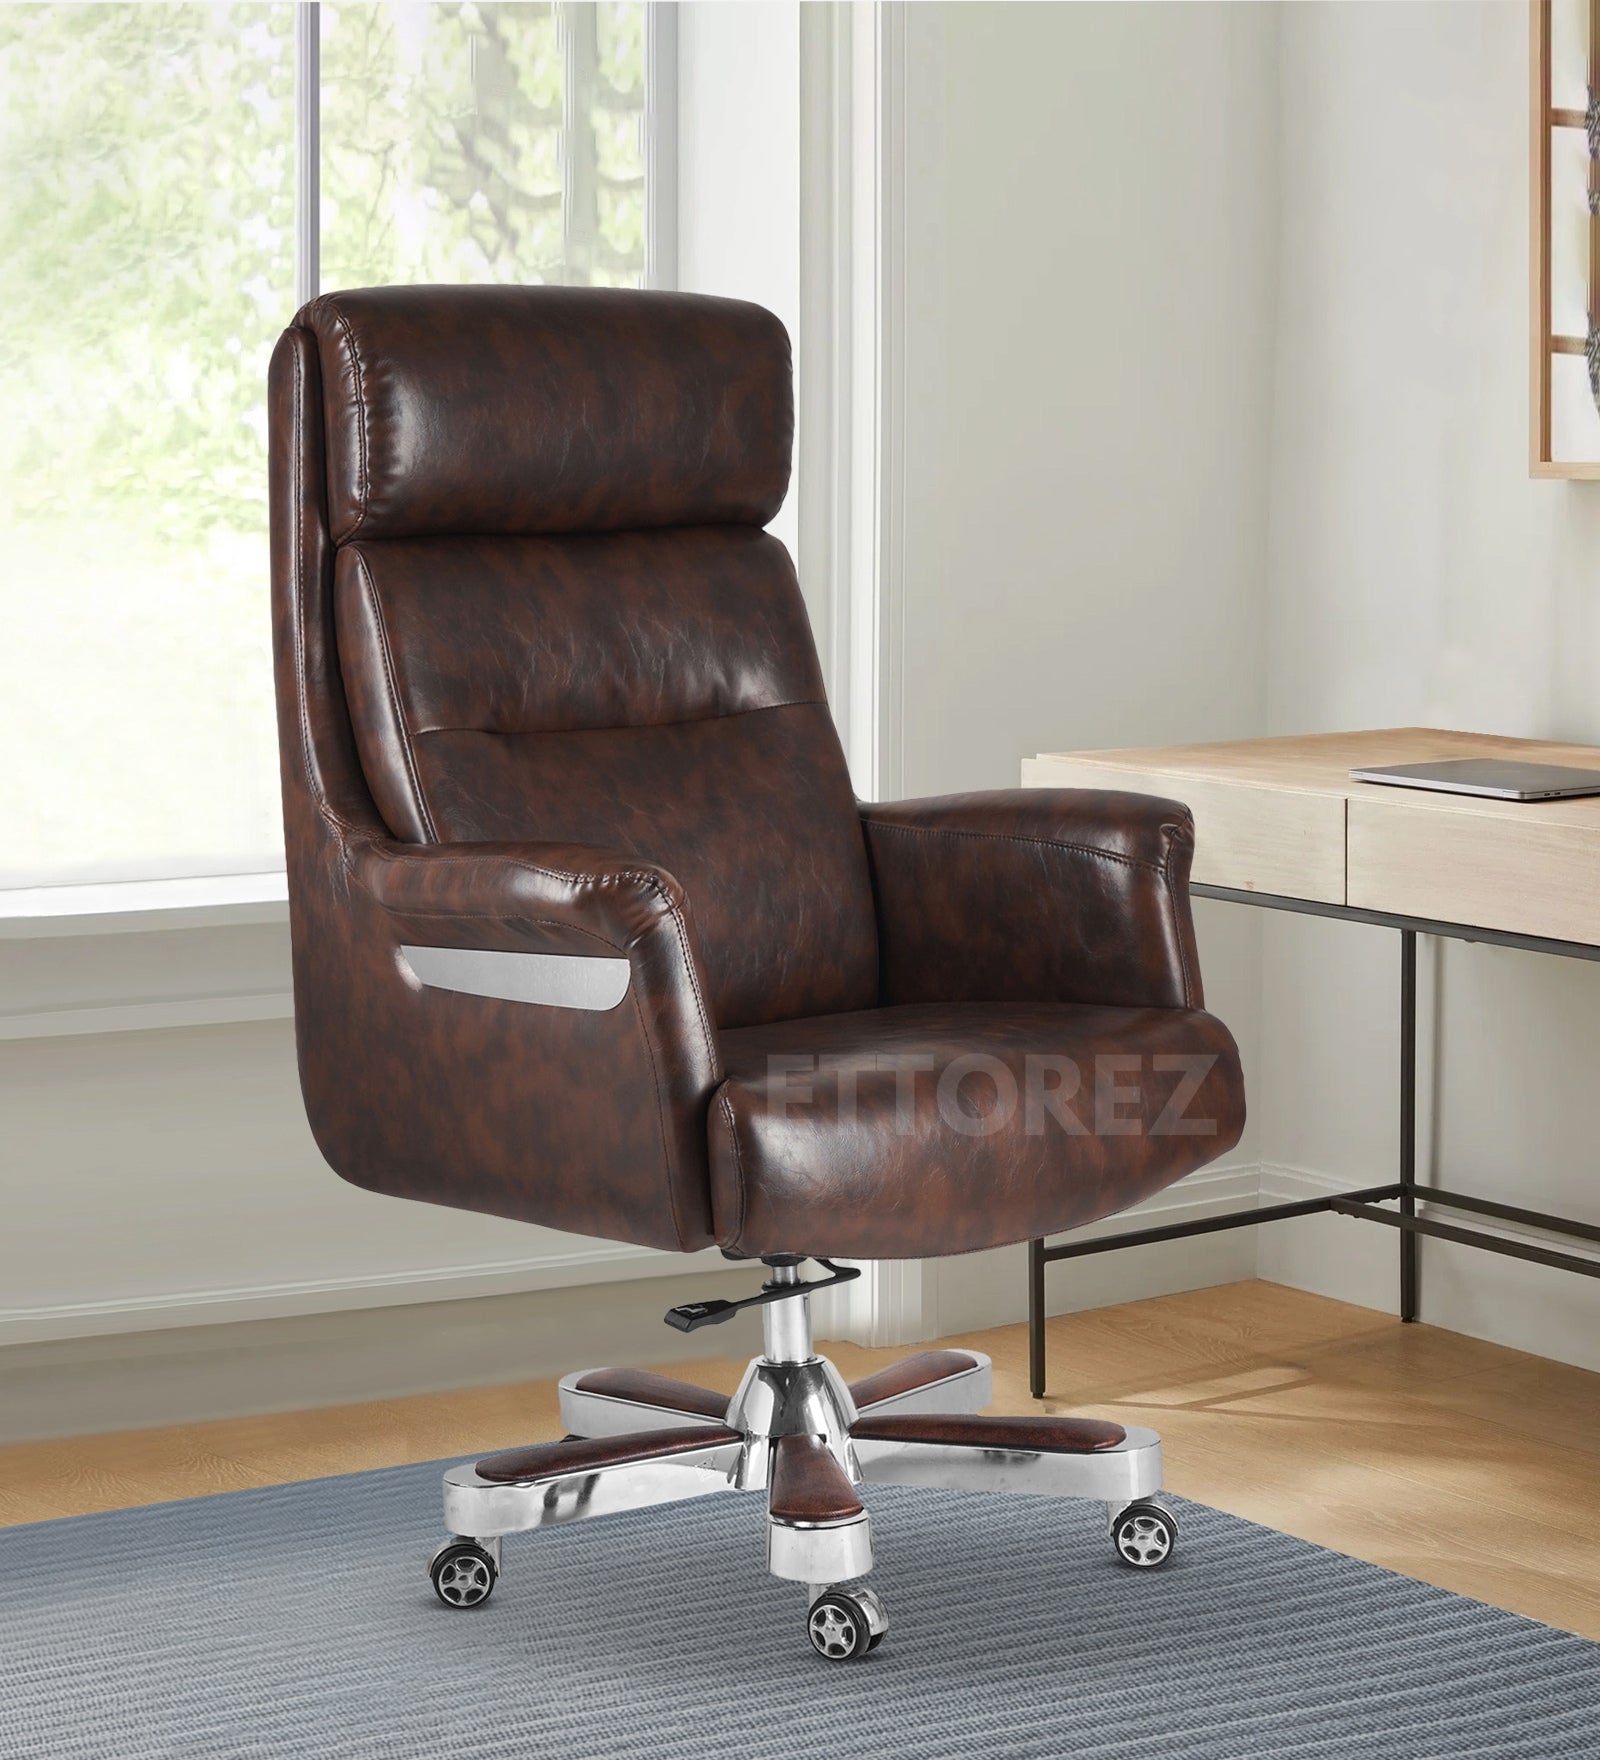 Ettorez GOLD Premium High Back Ergonomic Boss Chair